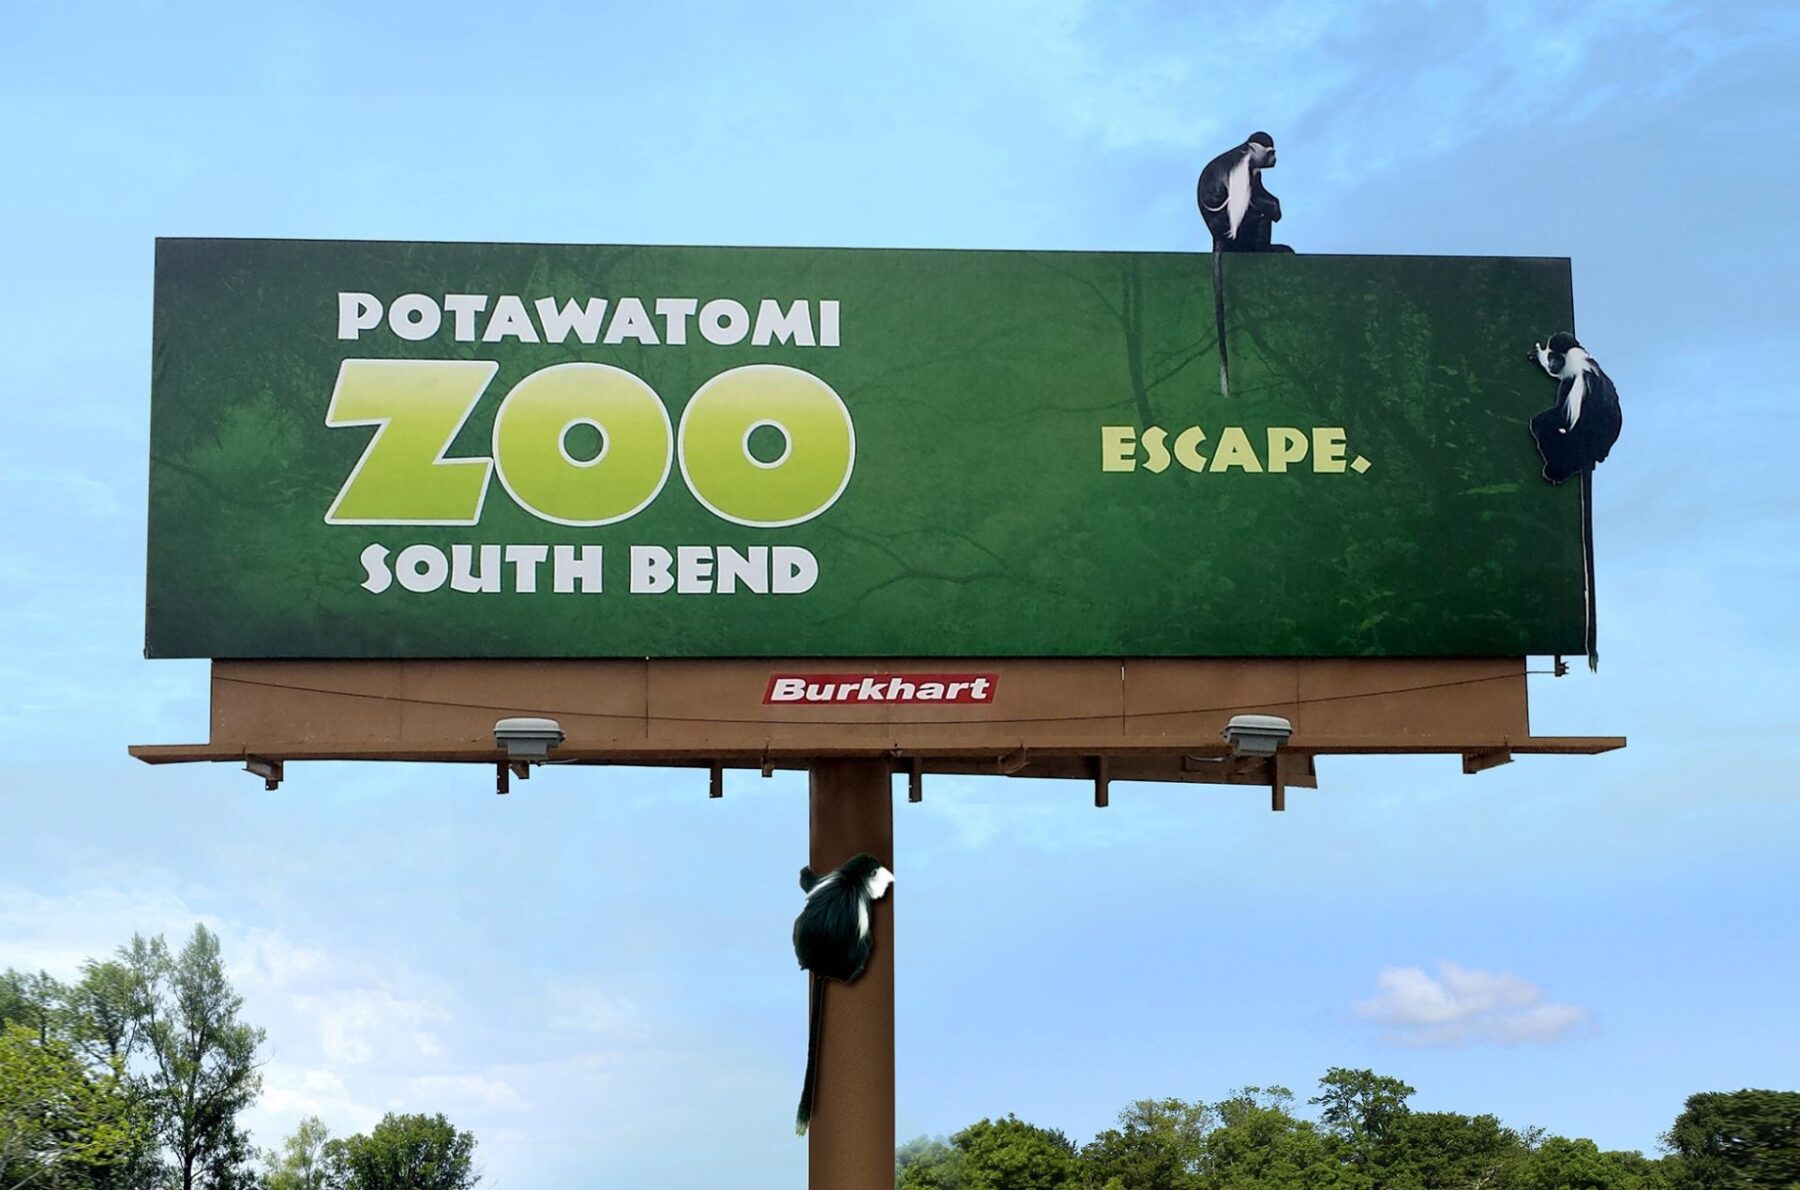 Potawatomi Zoo. South Bend. Indiana. Escape